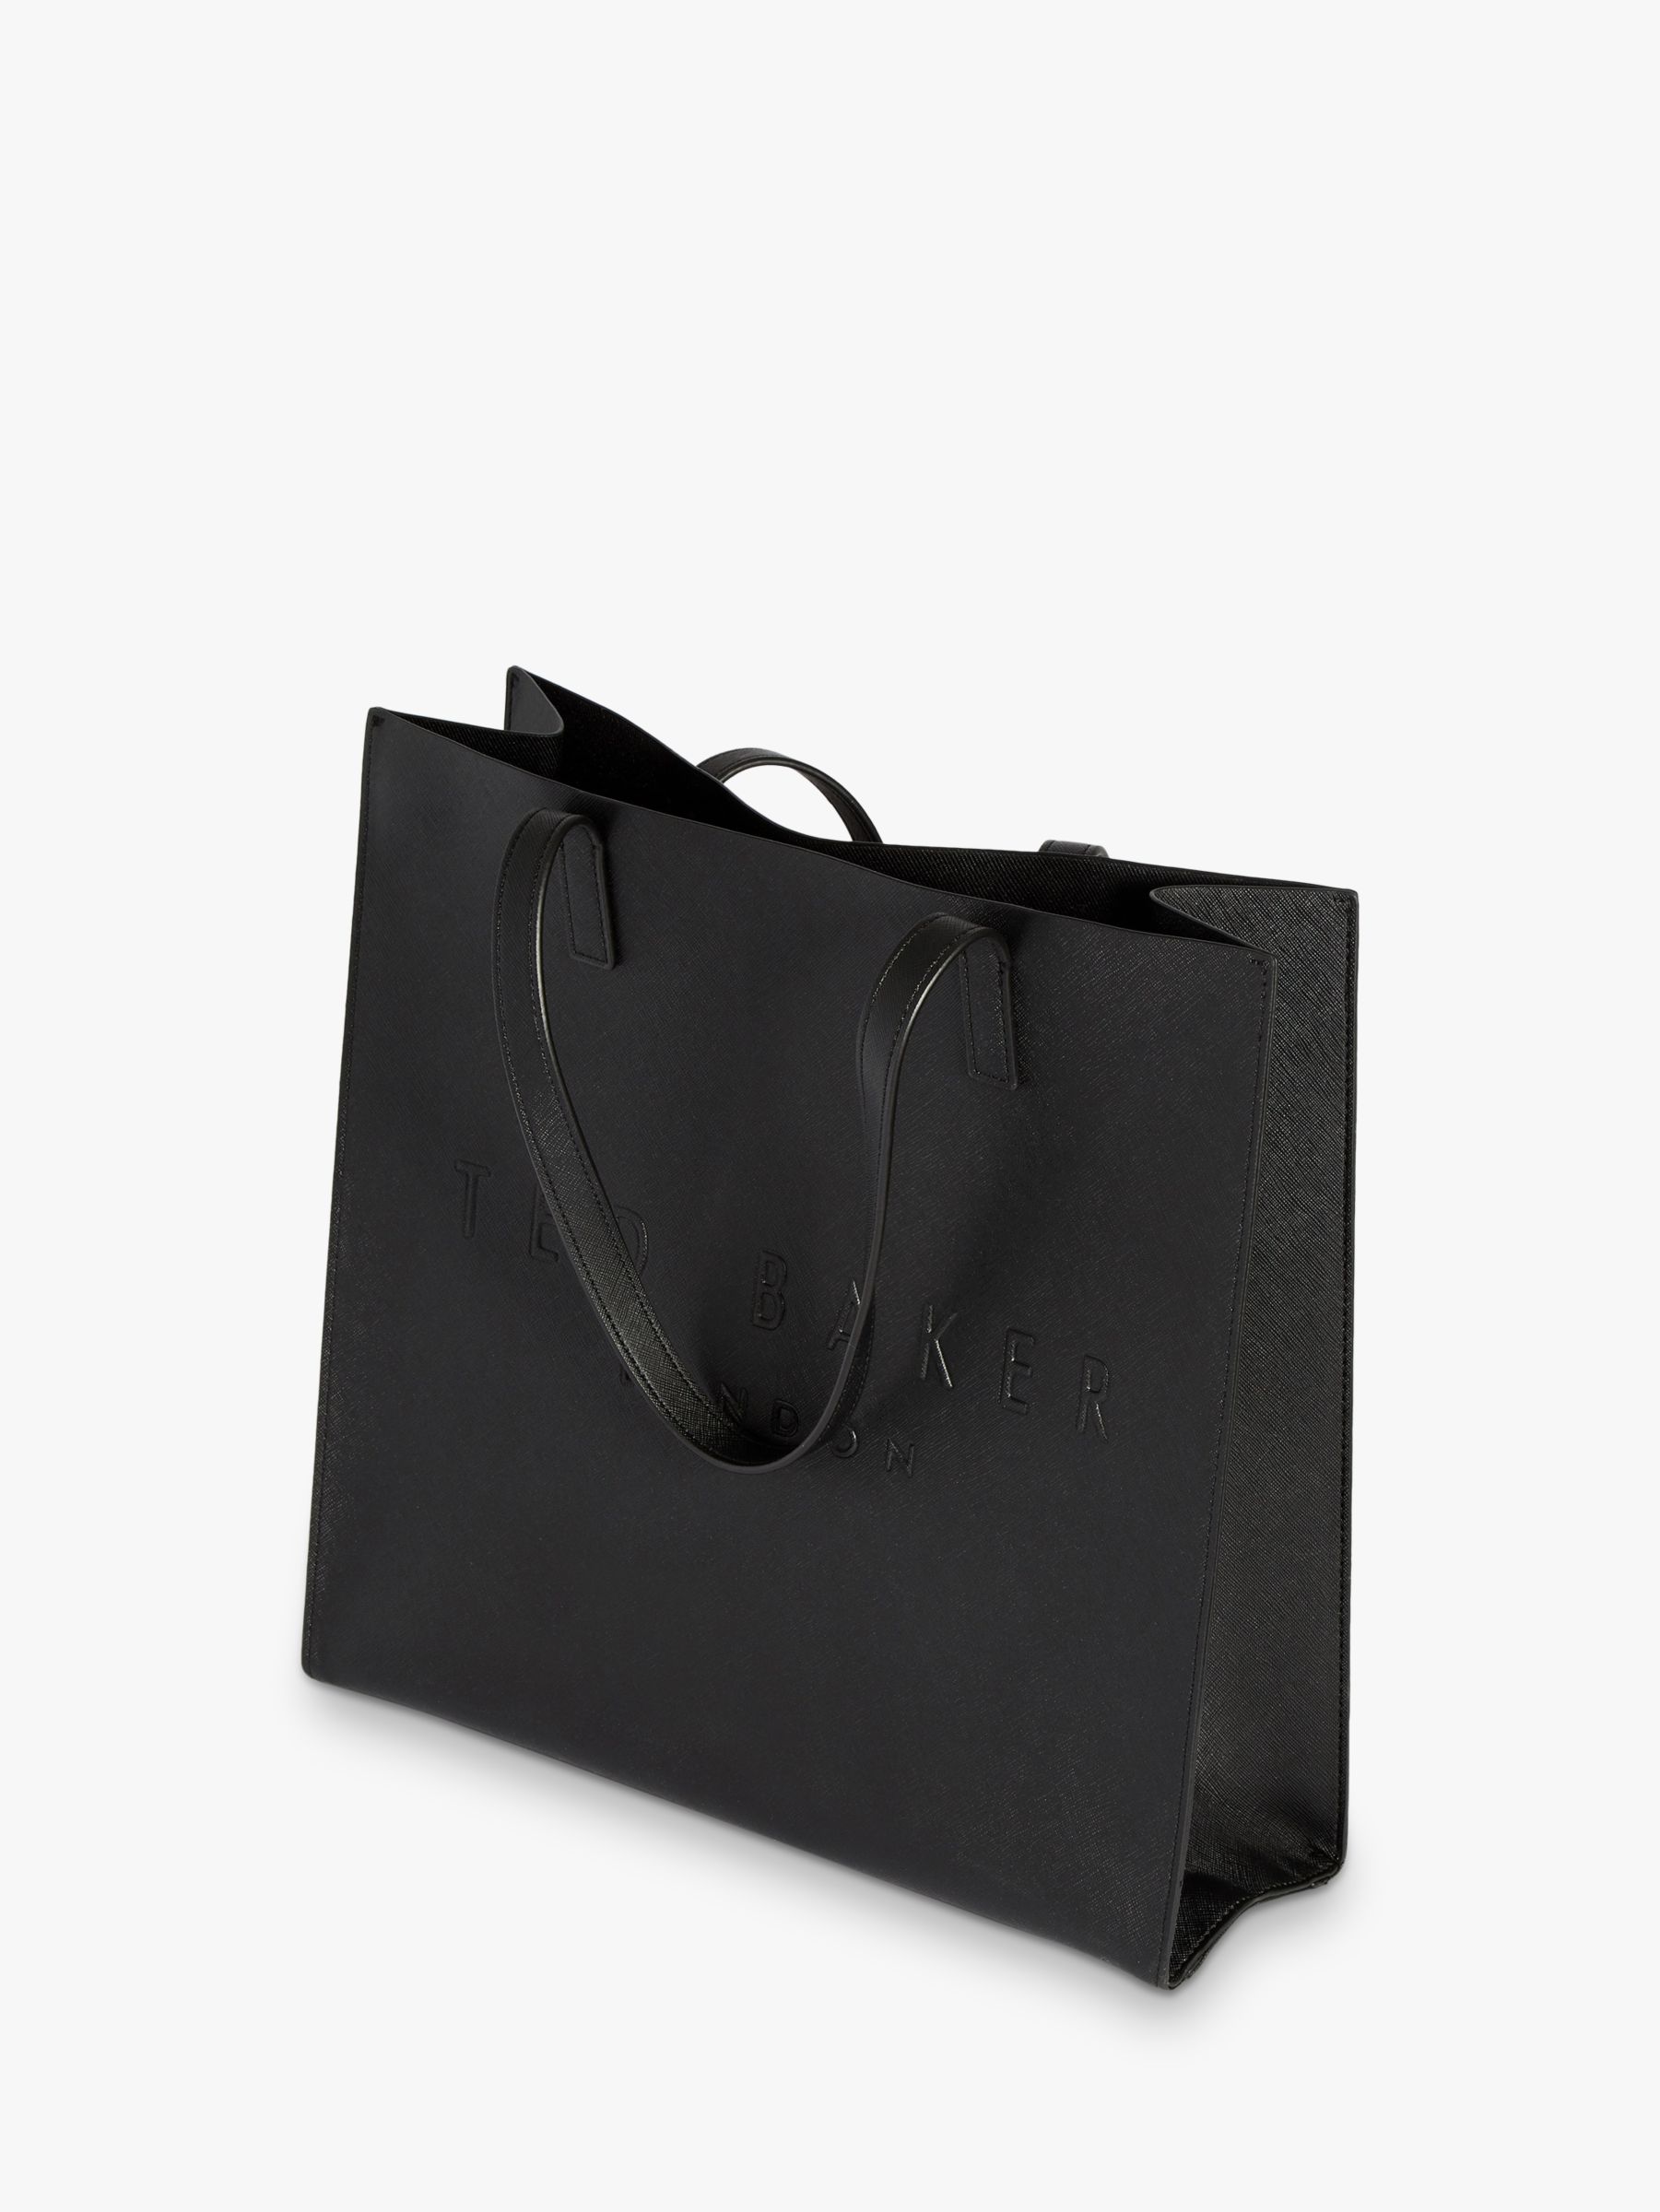 Ted Baker Sukicon Large Icon Shopper Bag, Black at John Lewis & Partners